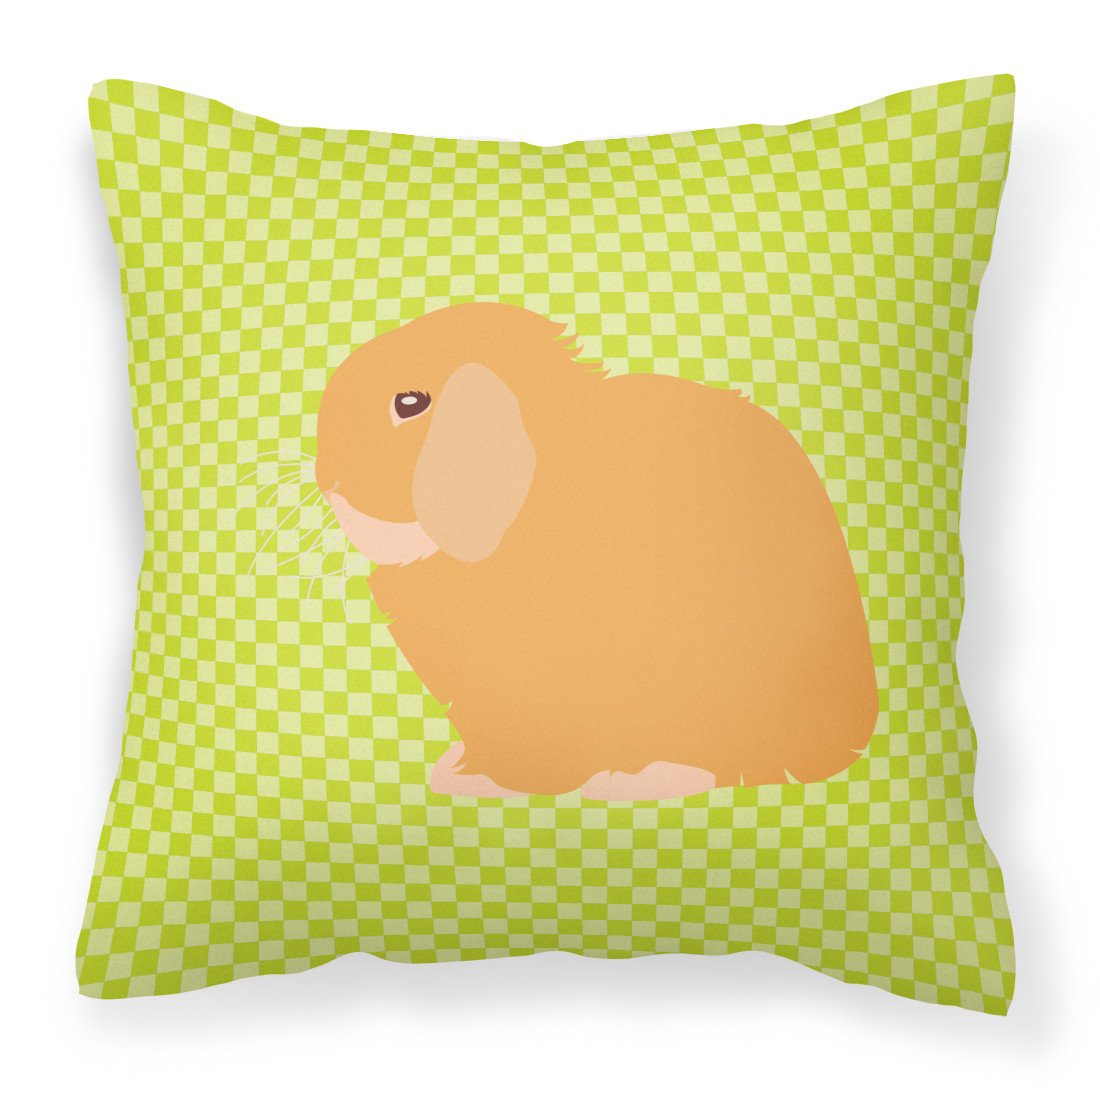 Holland Lop Rabbit Green Fabric Decorative Pillow BB7794PW1818 by Caroline's Treasures